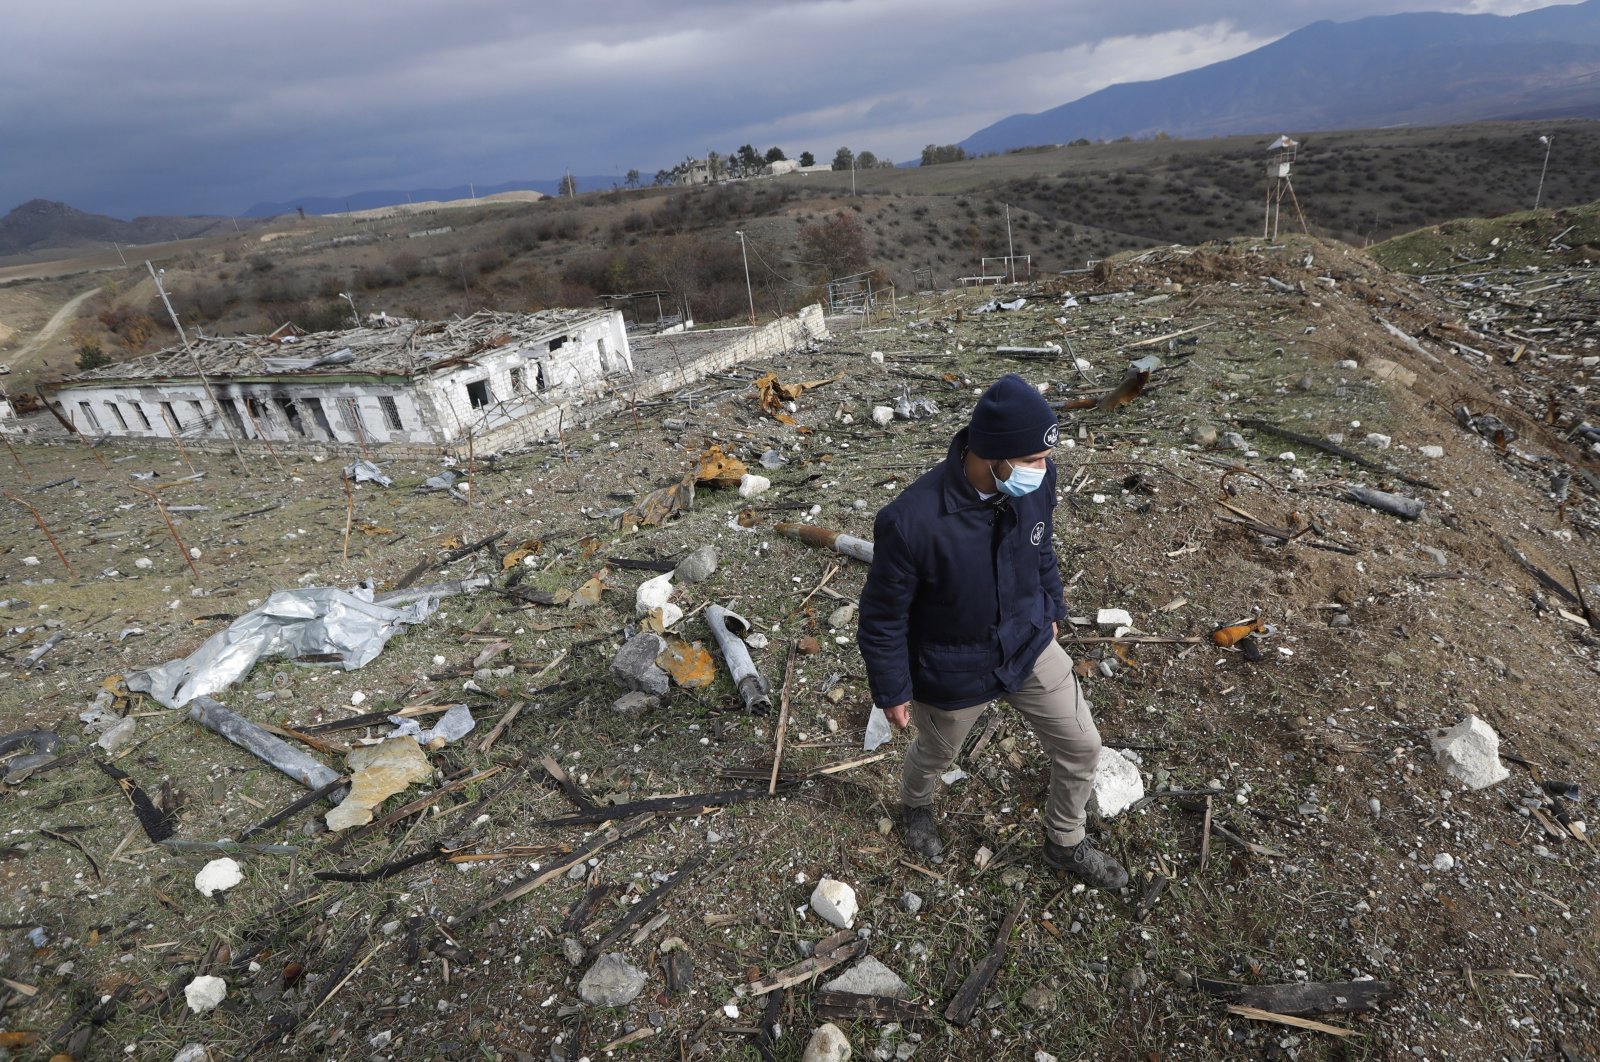 Koen Van Der West, survey manager at Halo Trust mine-clearing organization, examines unexploded items at a damaged ammunition store near Ballıca, in the outskirts of Khankhendi, Karabakh, Azerbaijan, Nov. 23, 2020. (AP File Photo)